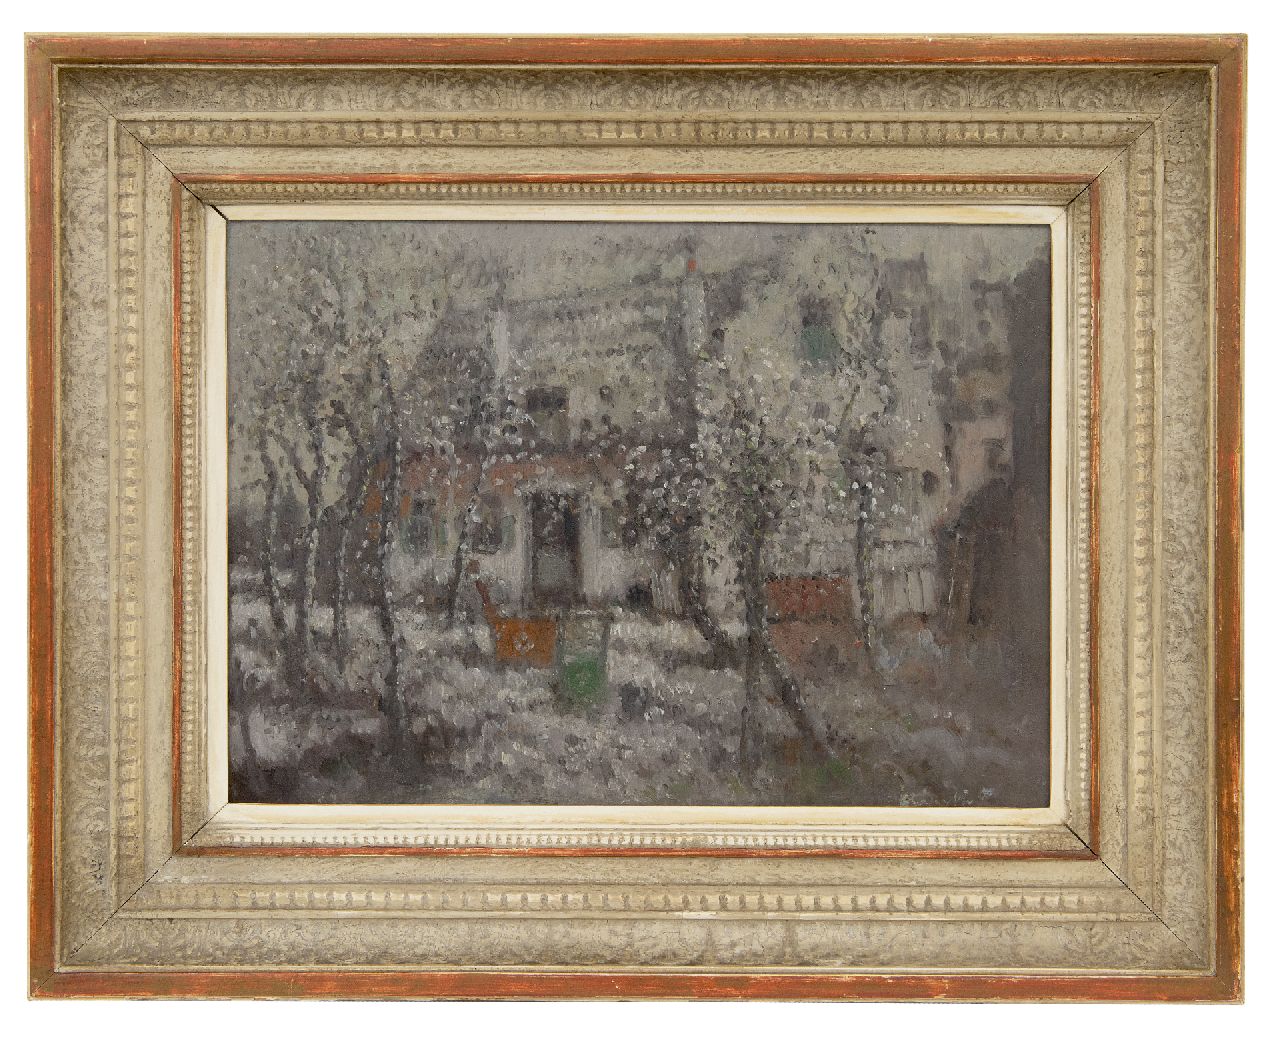 Daalhoff H.A. van | Hermanus Antonius 'Henri' van Daalhoff | Paintings offered for sale | Winter, oil on panel 25.5 x 35.5 cm, signed l.r. and on the reverse